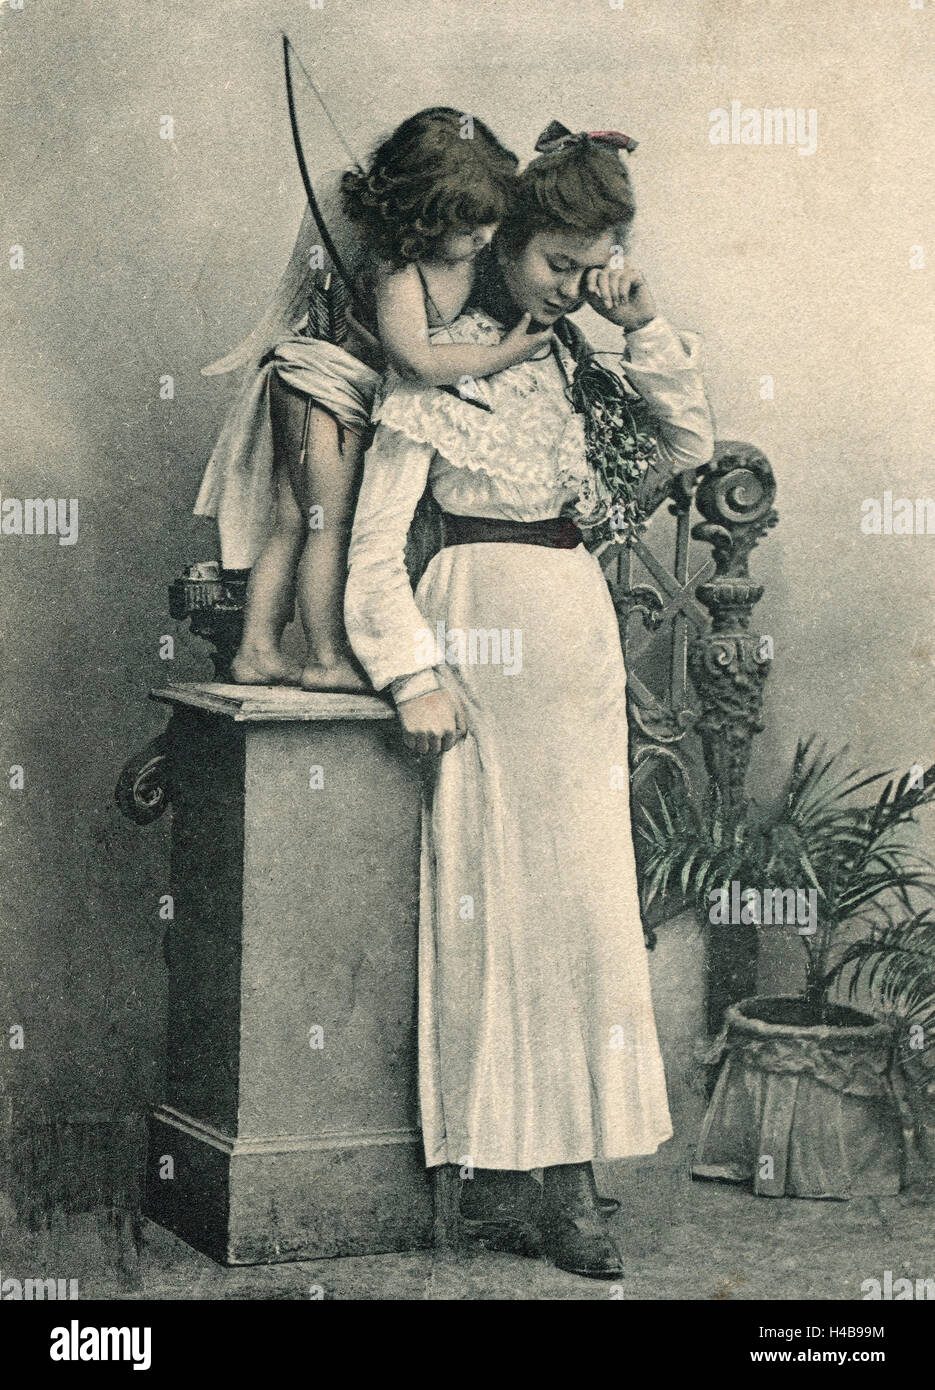 Postcard, historical, Amor comforts young woman, b/w, Stock Photo